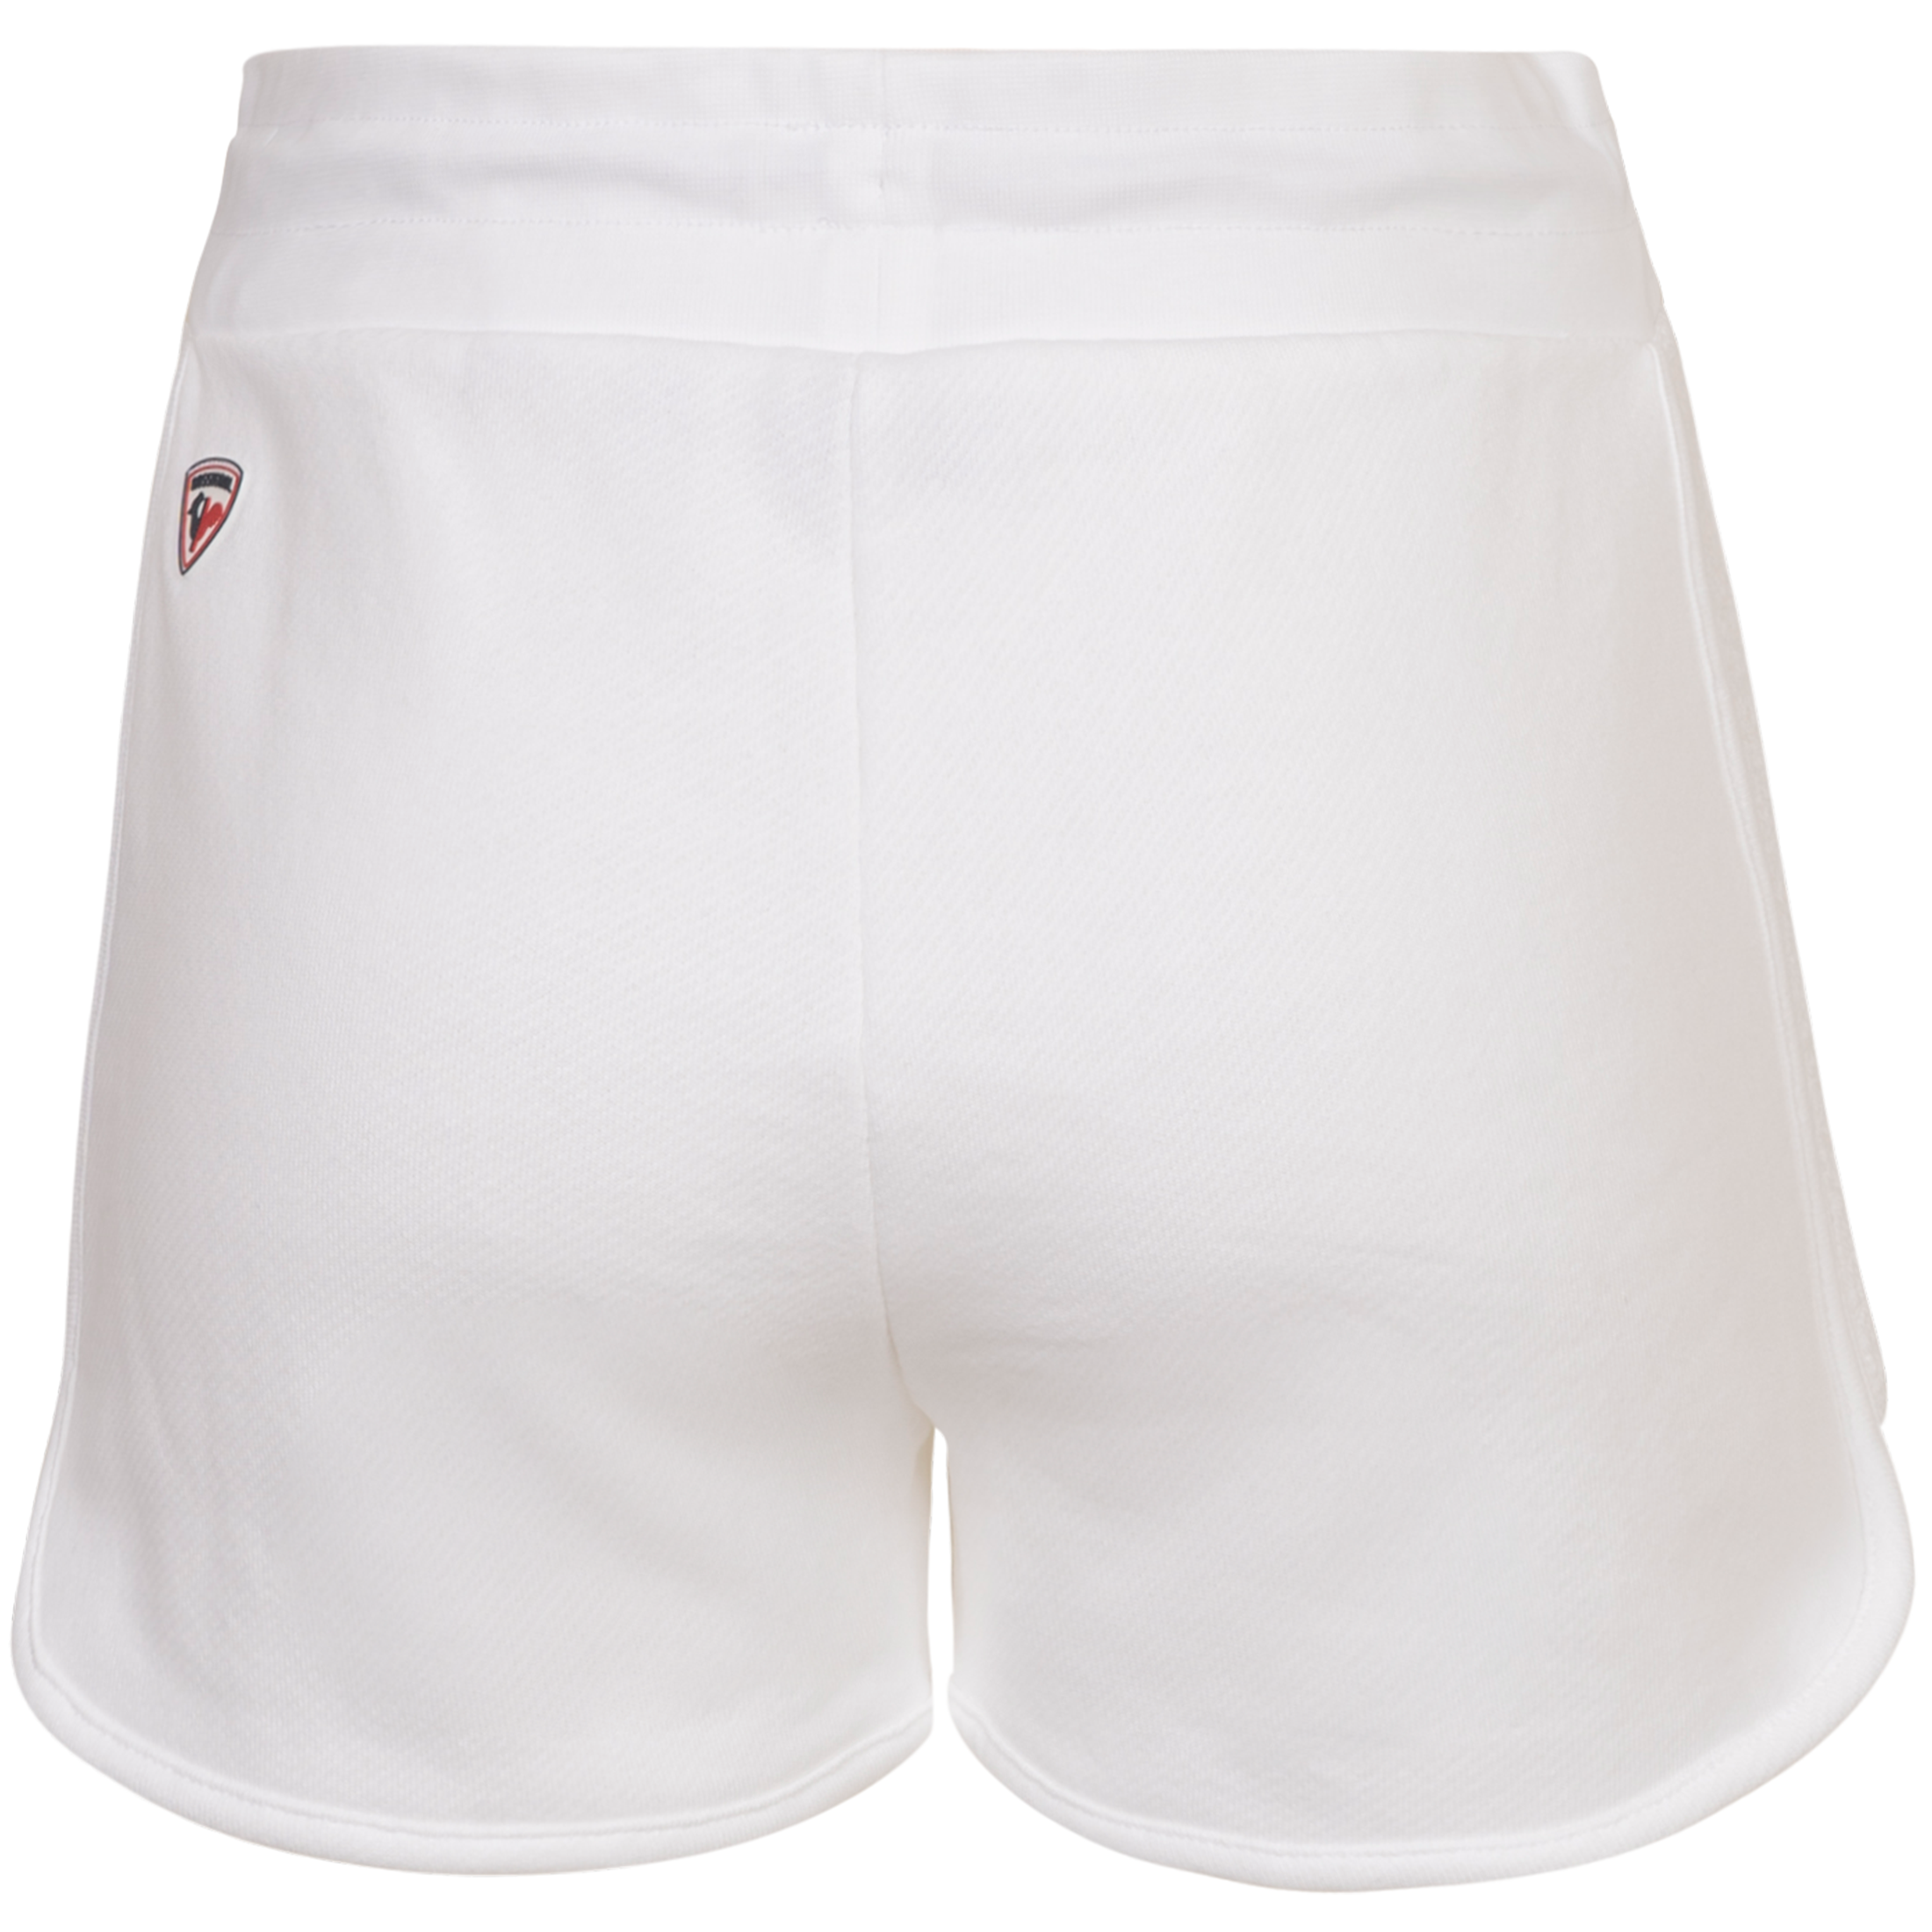 W Rossi Shorts - White